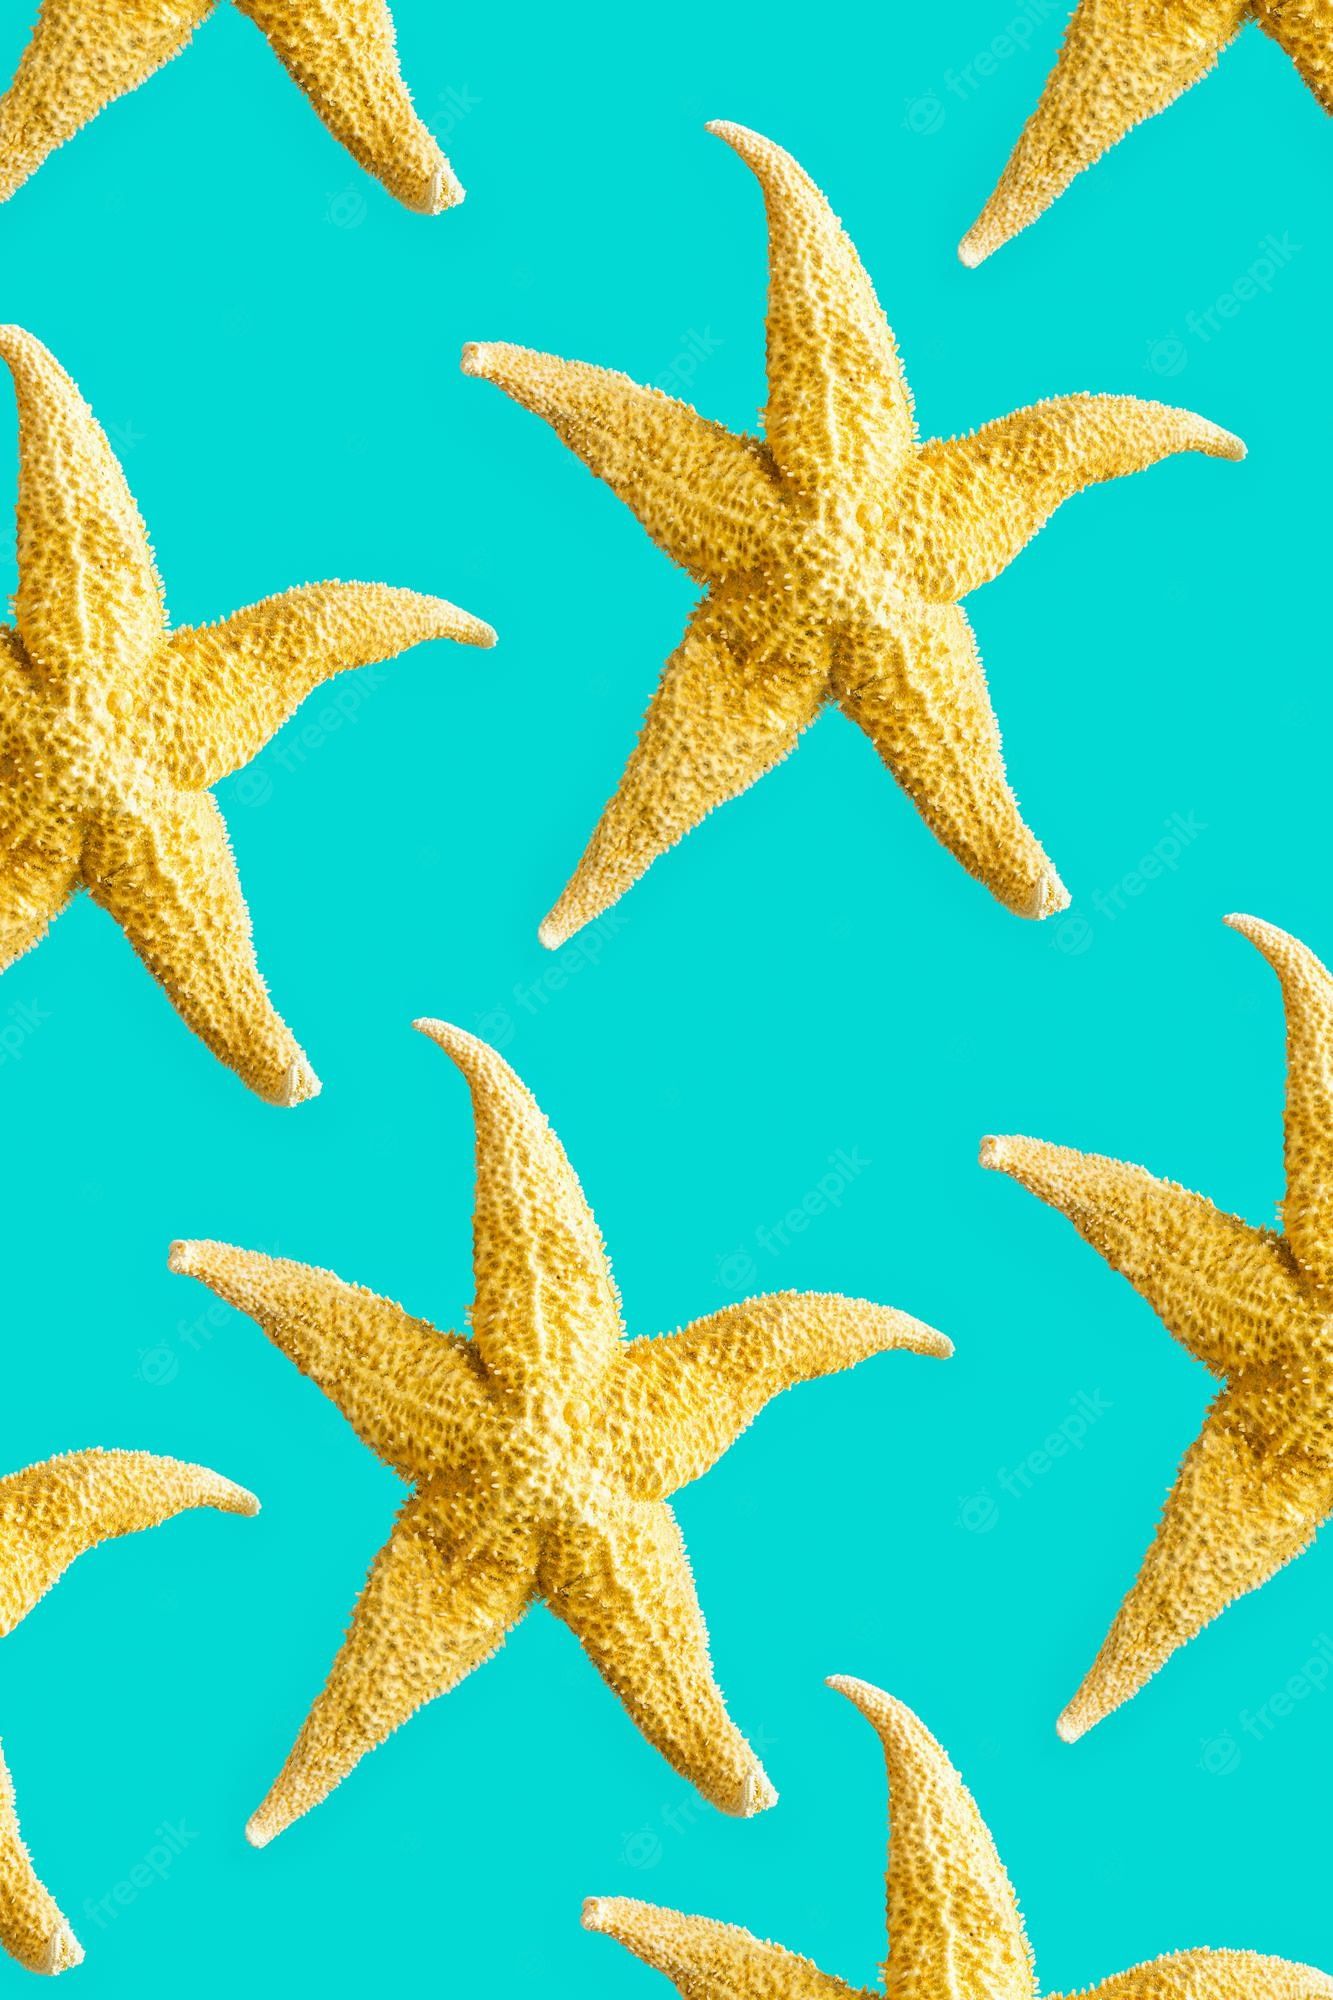 A blue background with starfish - Starfish